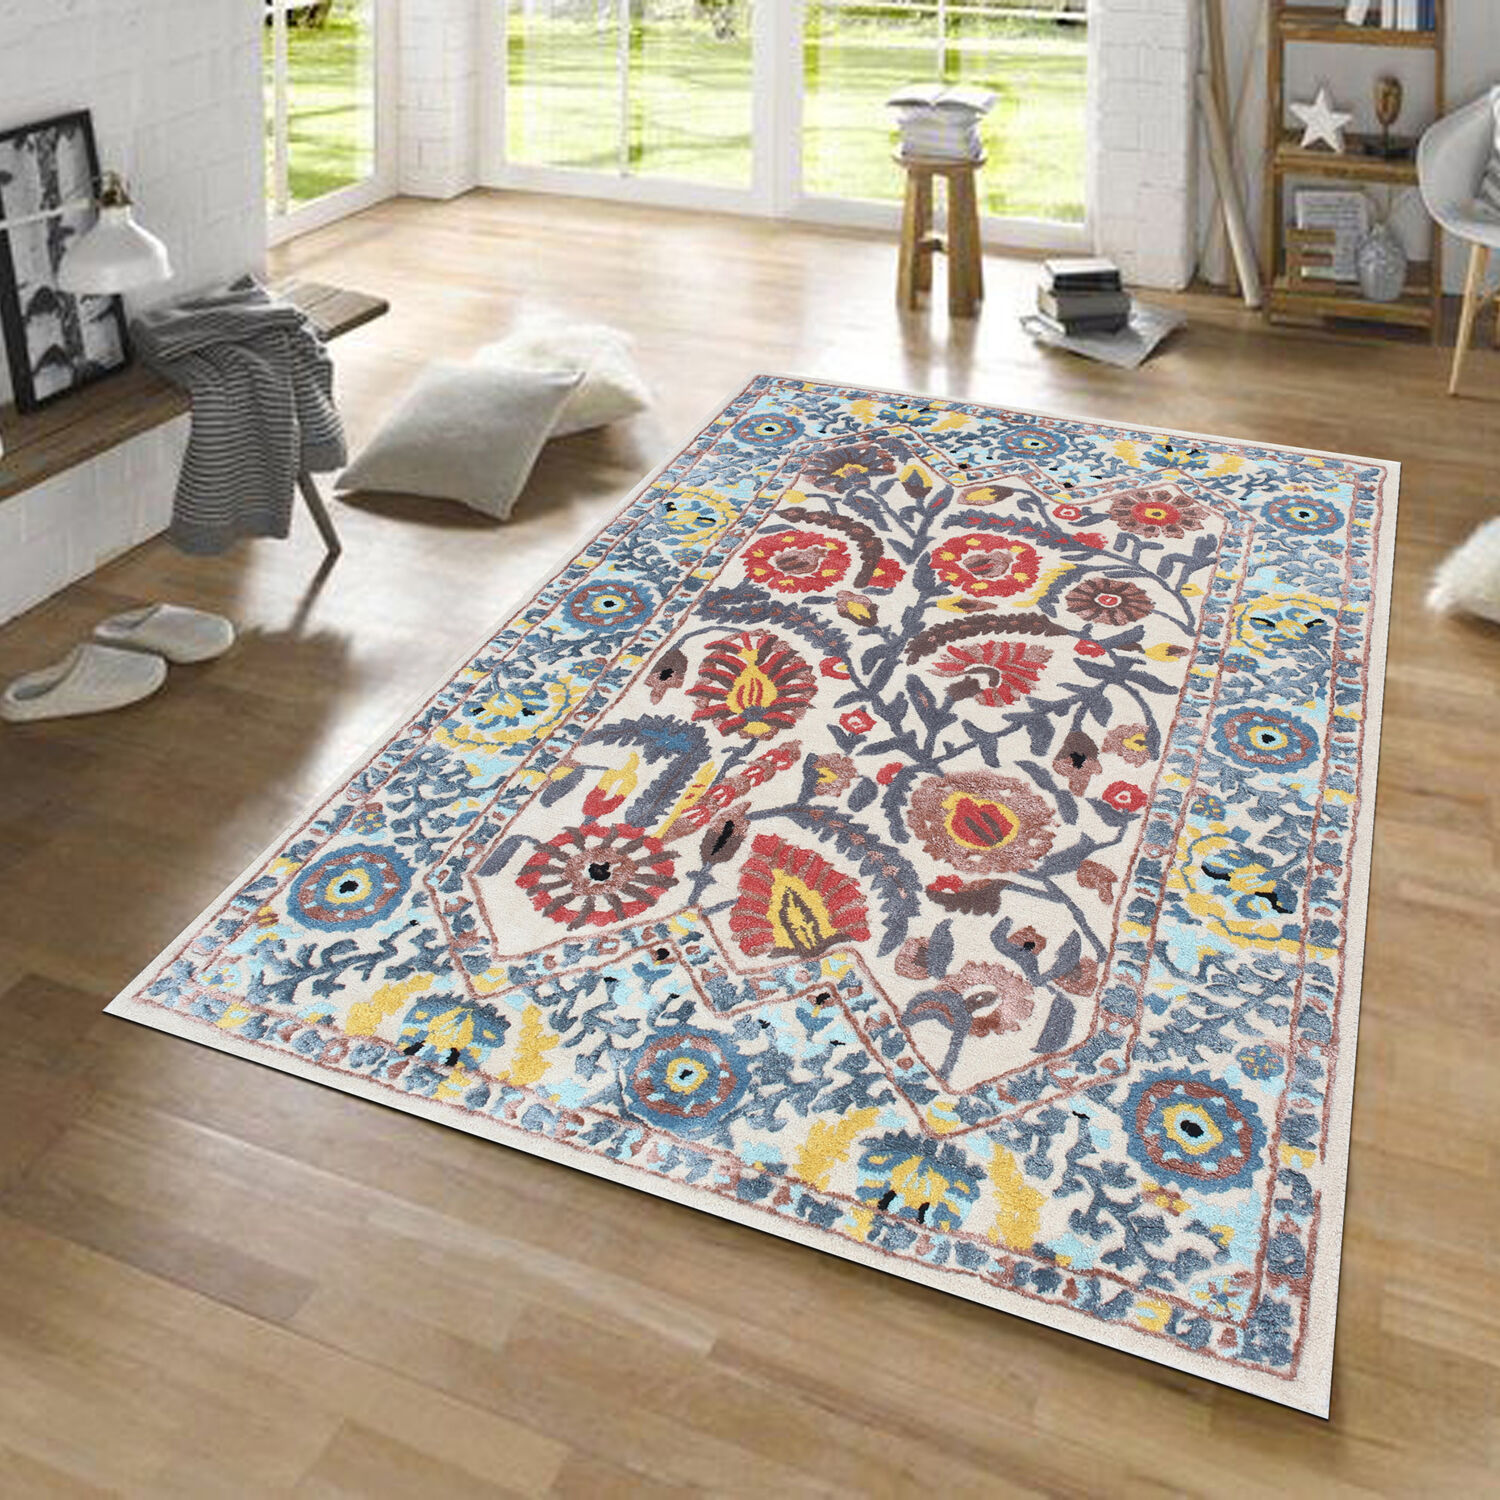 Louis vuitton lv beige luxury area rug for living room bedroom